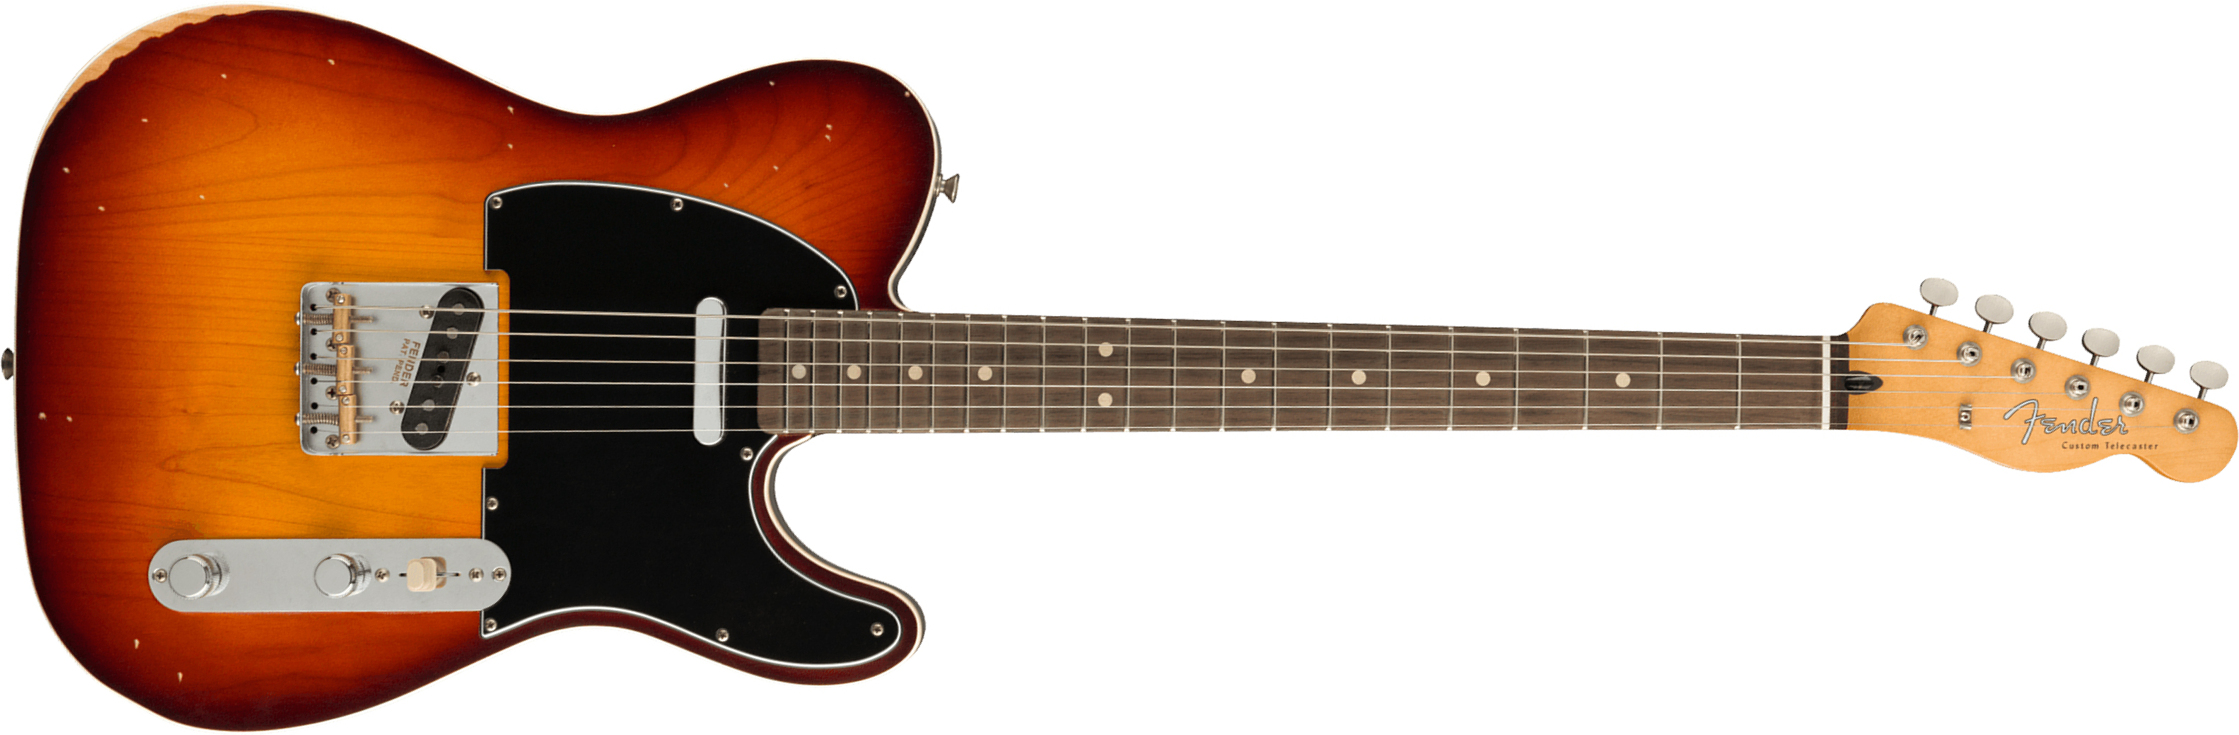 Fender Jason Isbell Tele Custom Signature Rw +housse - Road Worn 3-color Chocolate Burst - Televorm elektrische gitaar - Main picture